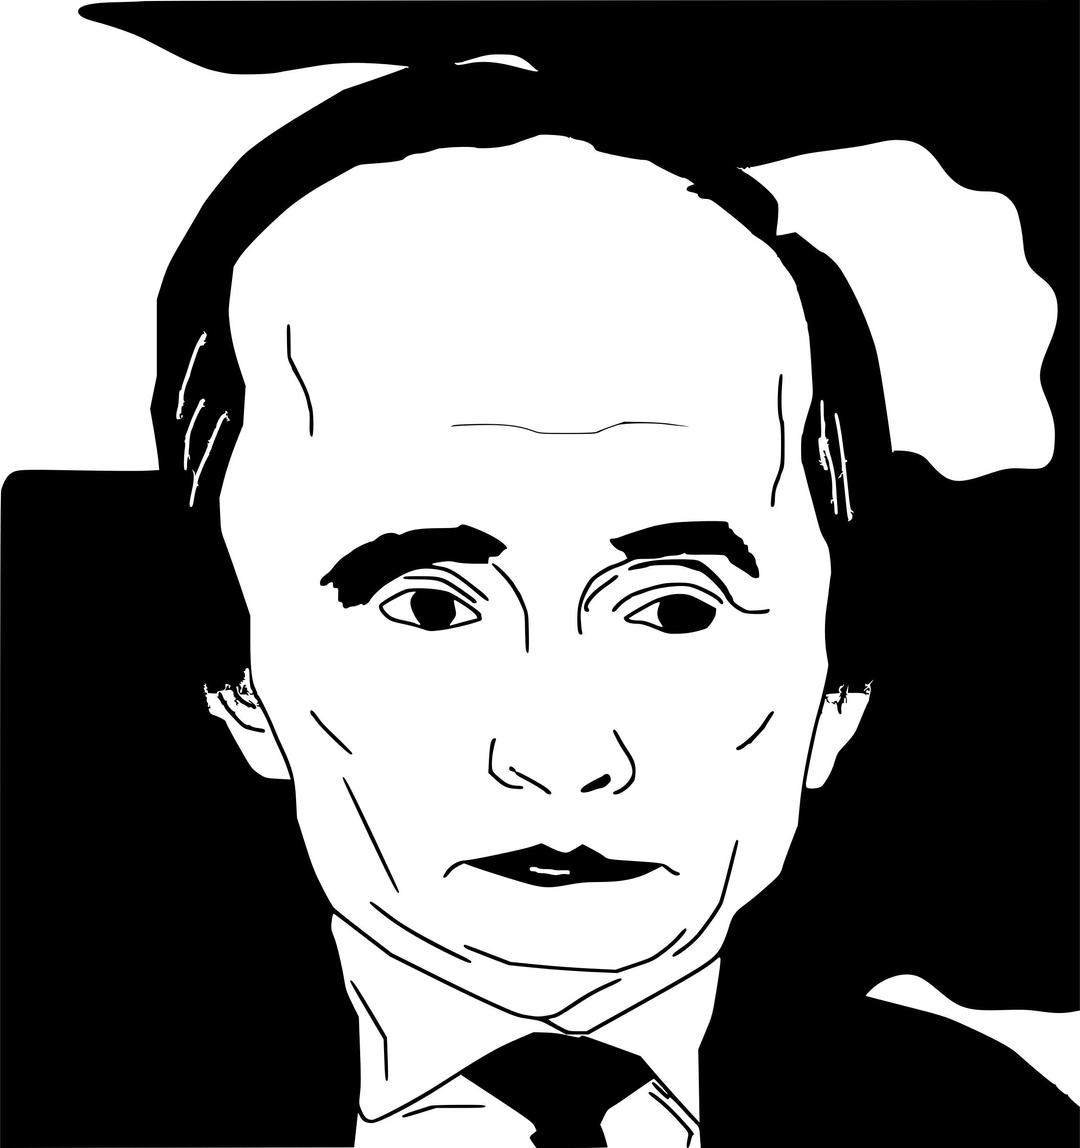 Vladimir Putin Caricature png transparent